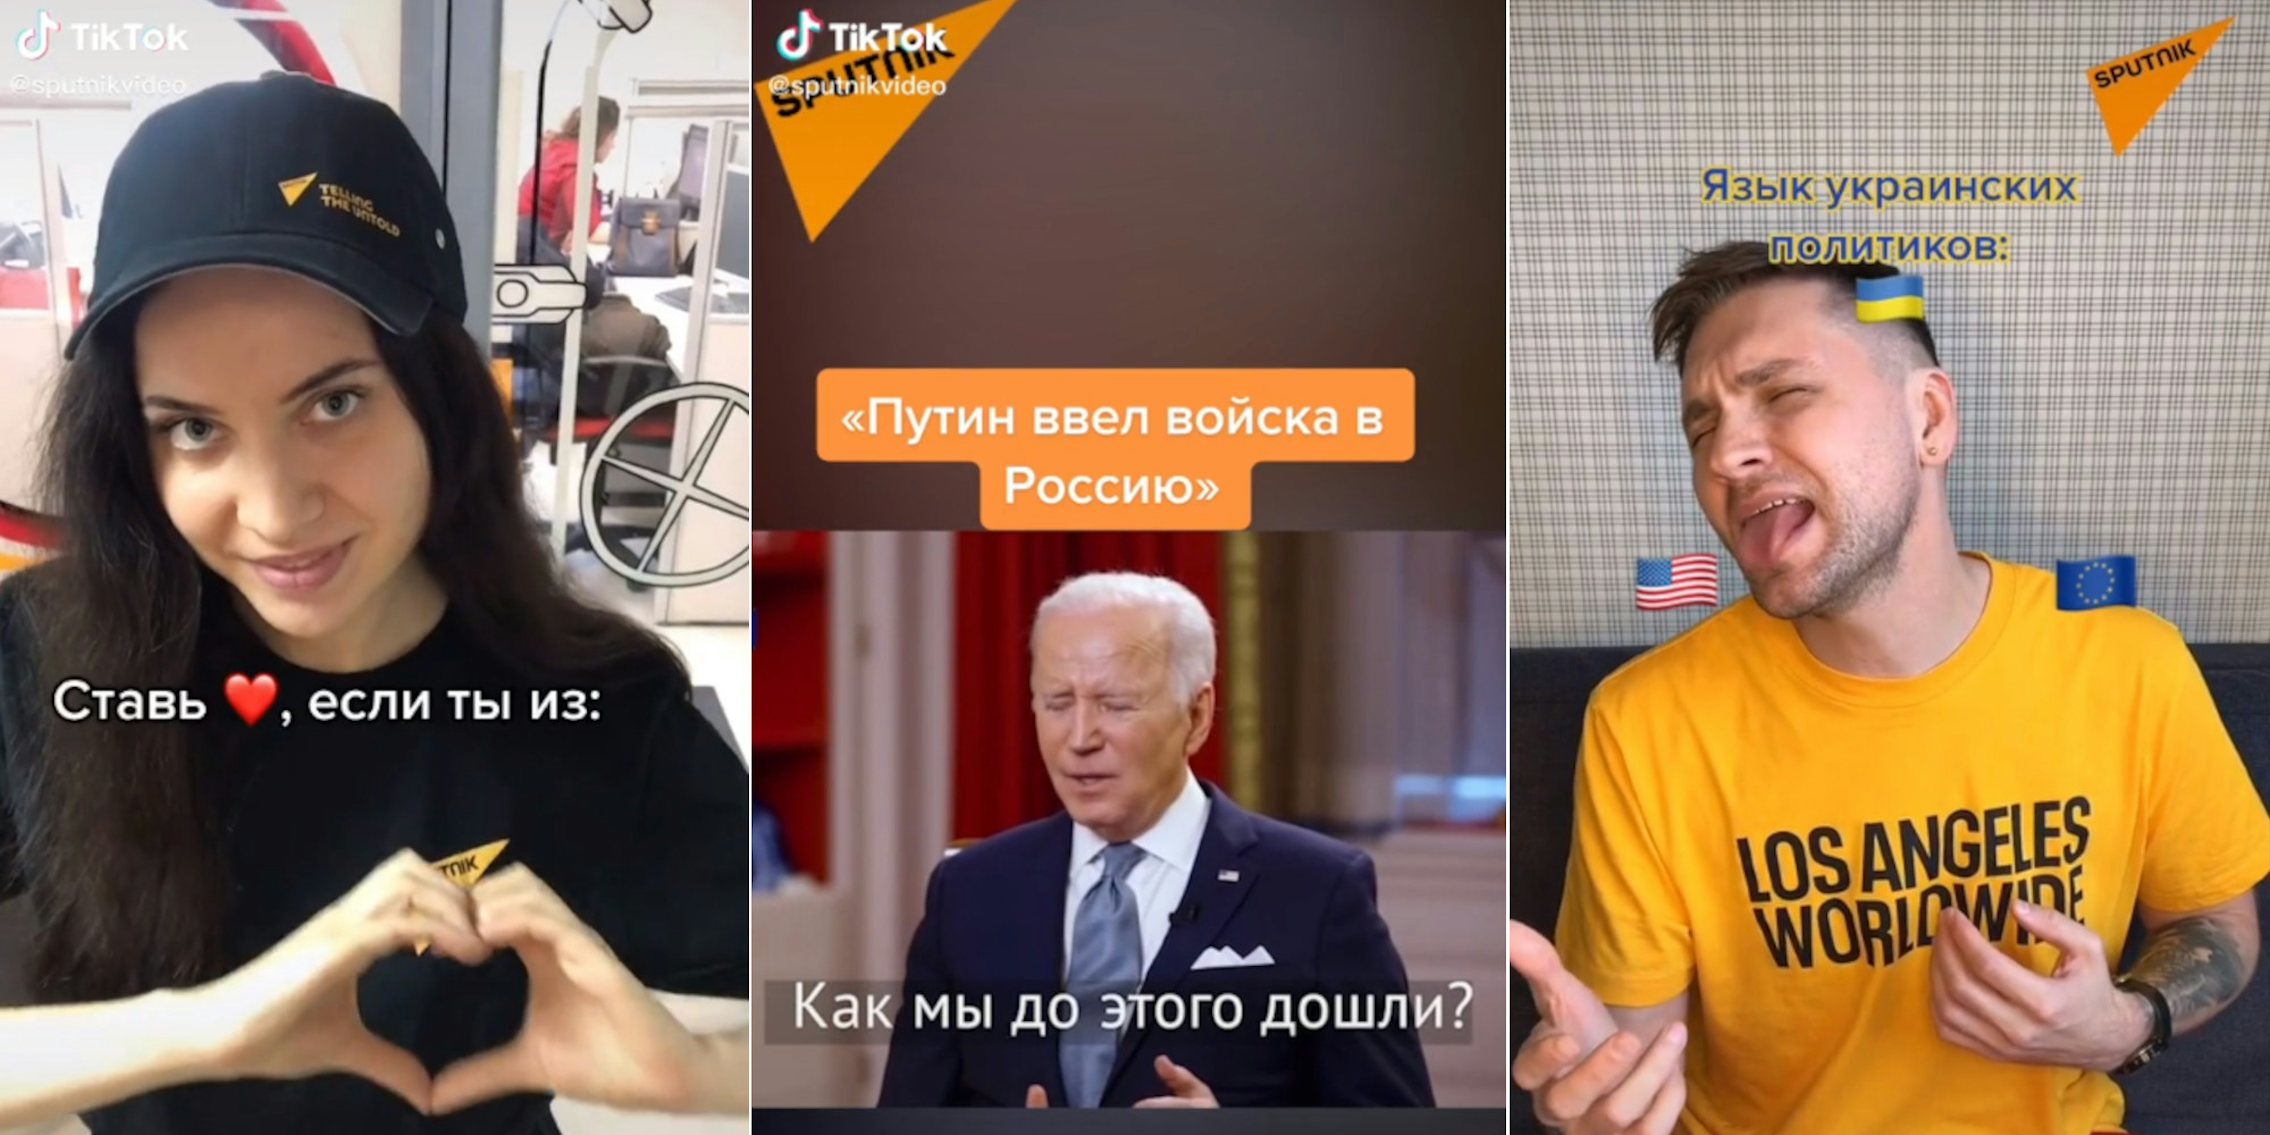 TikTok Russian content ban